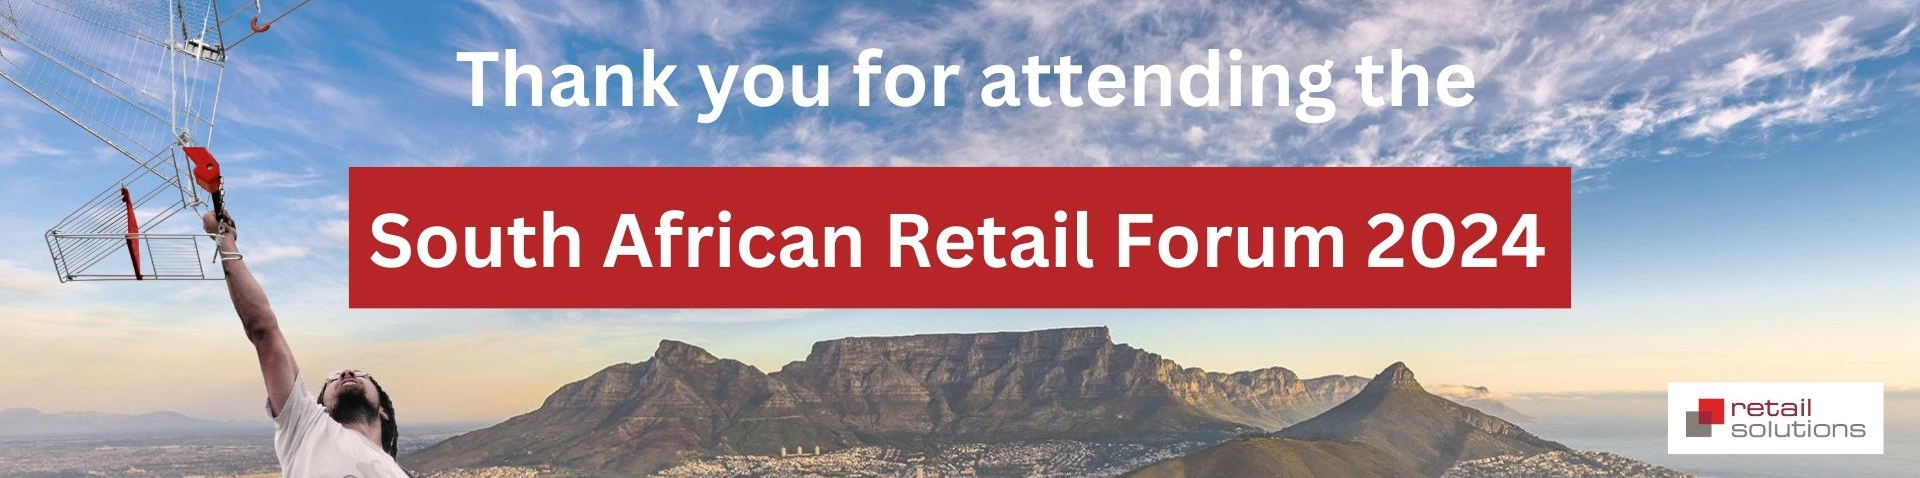 Start_Slider_Thank_you_Retail_Forum_South_Africa